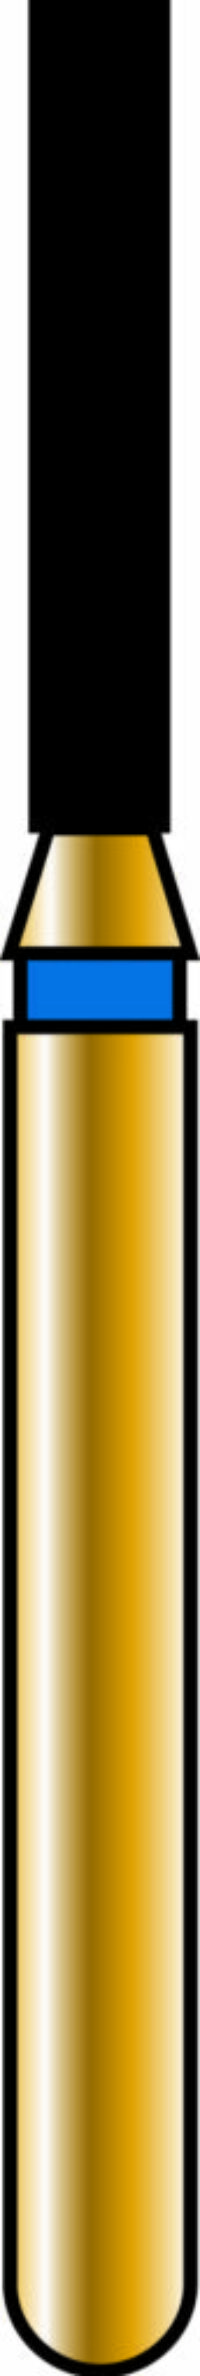 Flat End Cylinder 12-7mm Gold Diamond Bur